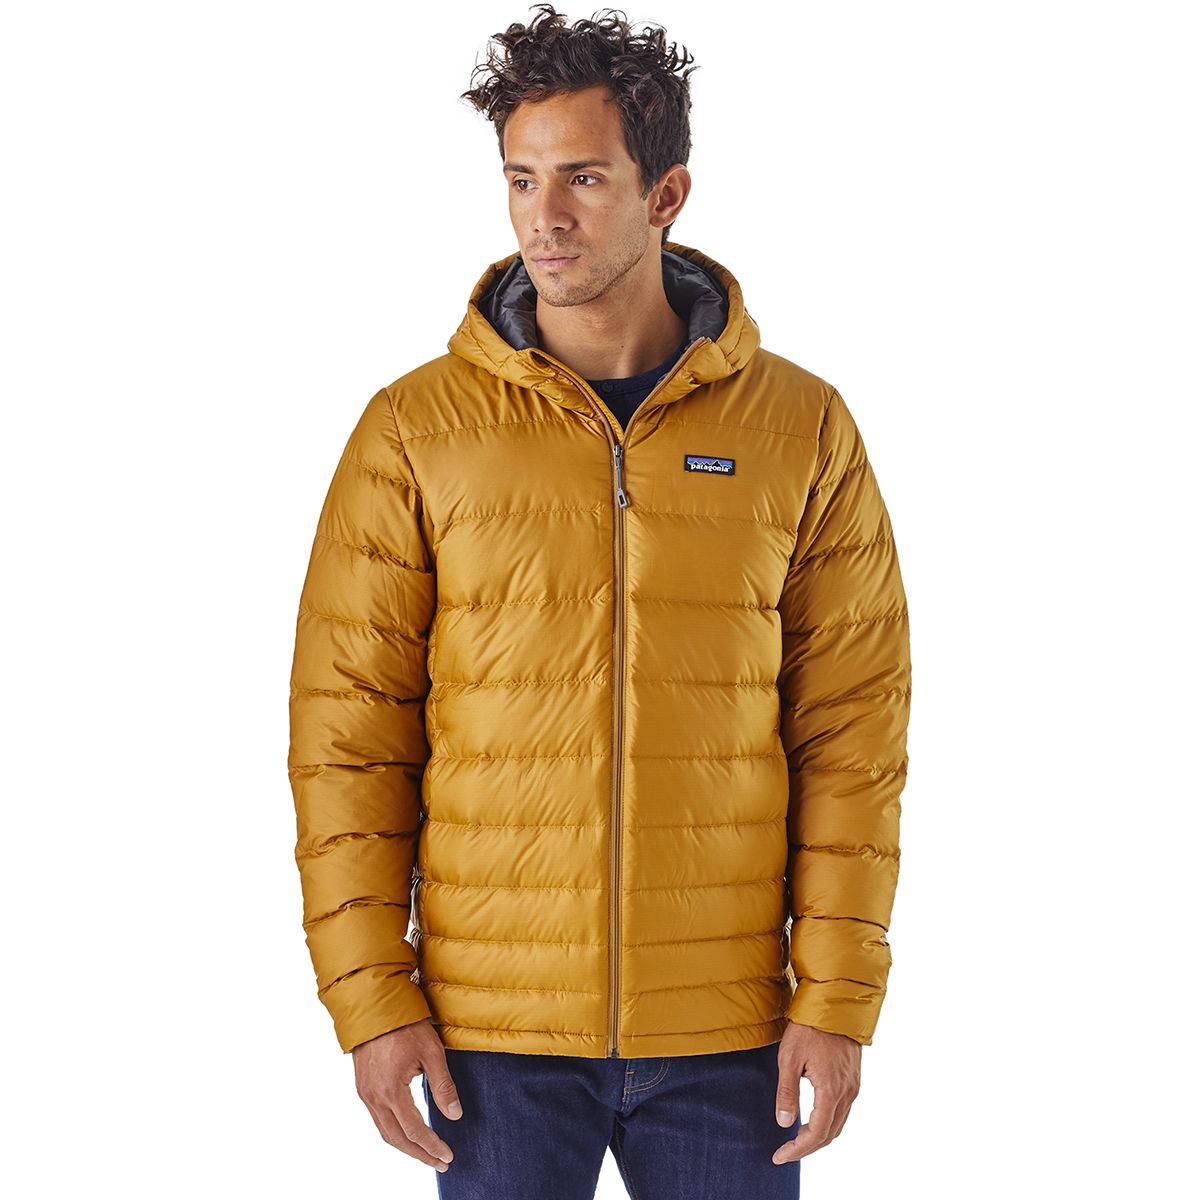 Patagonia Hi-Loft Hooded Sweater Jacket - Men's - Clothing